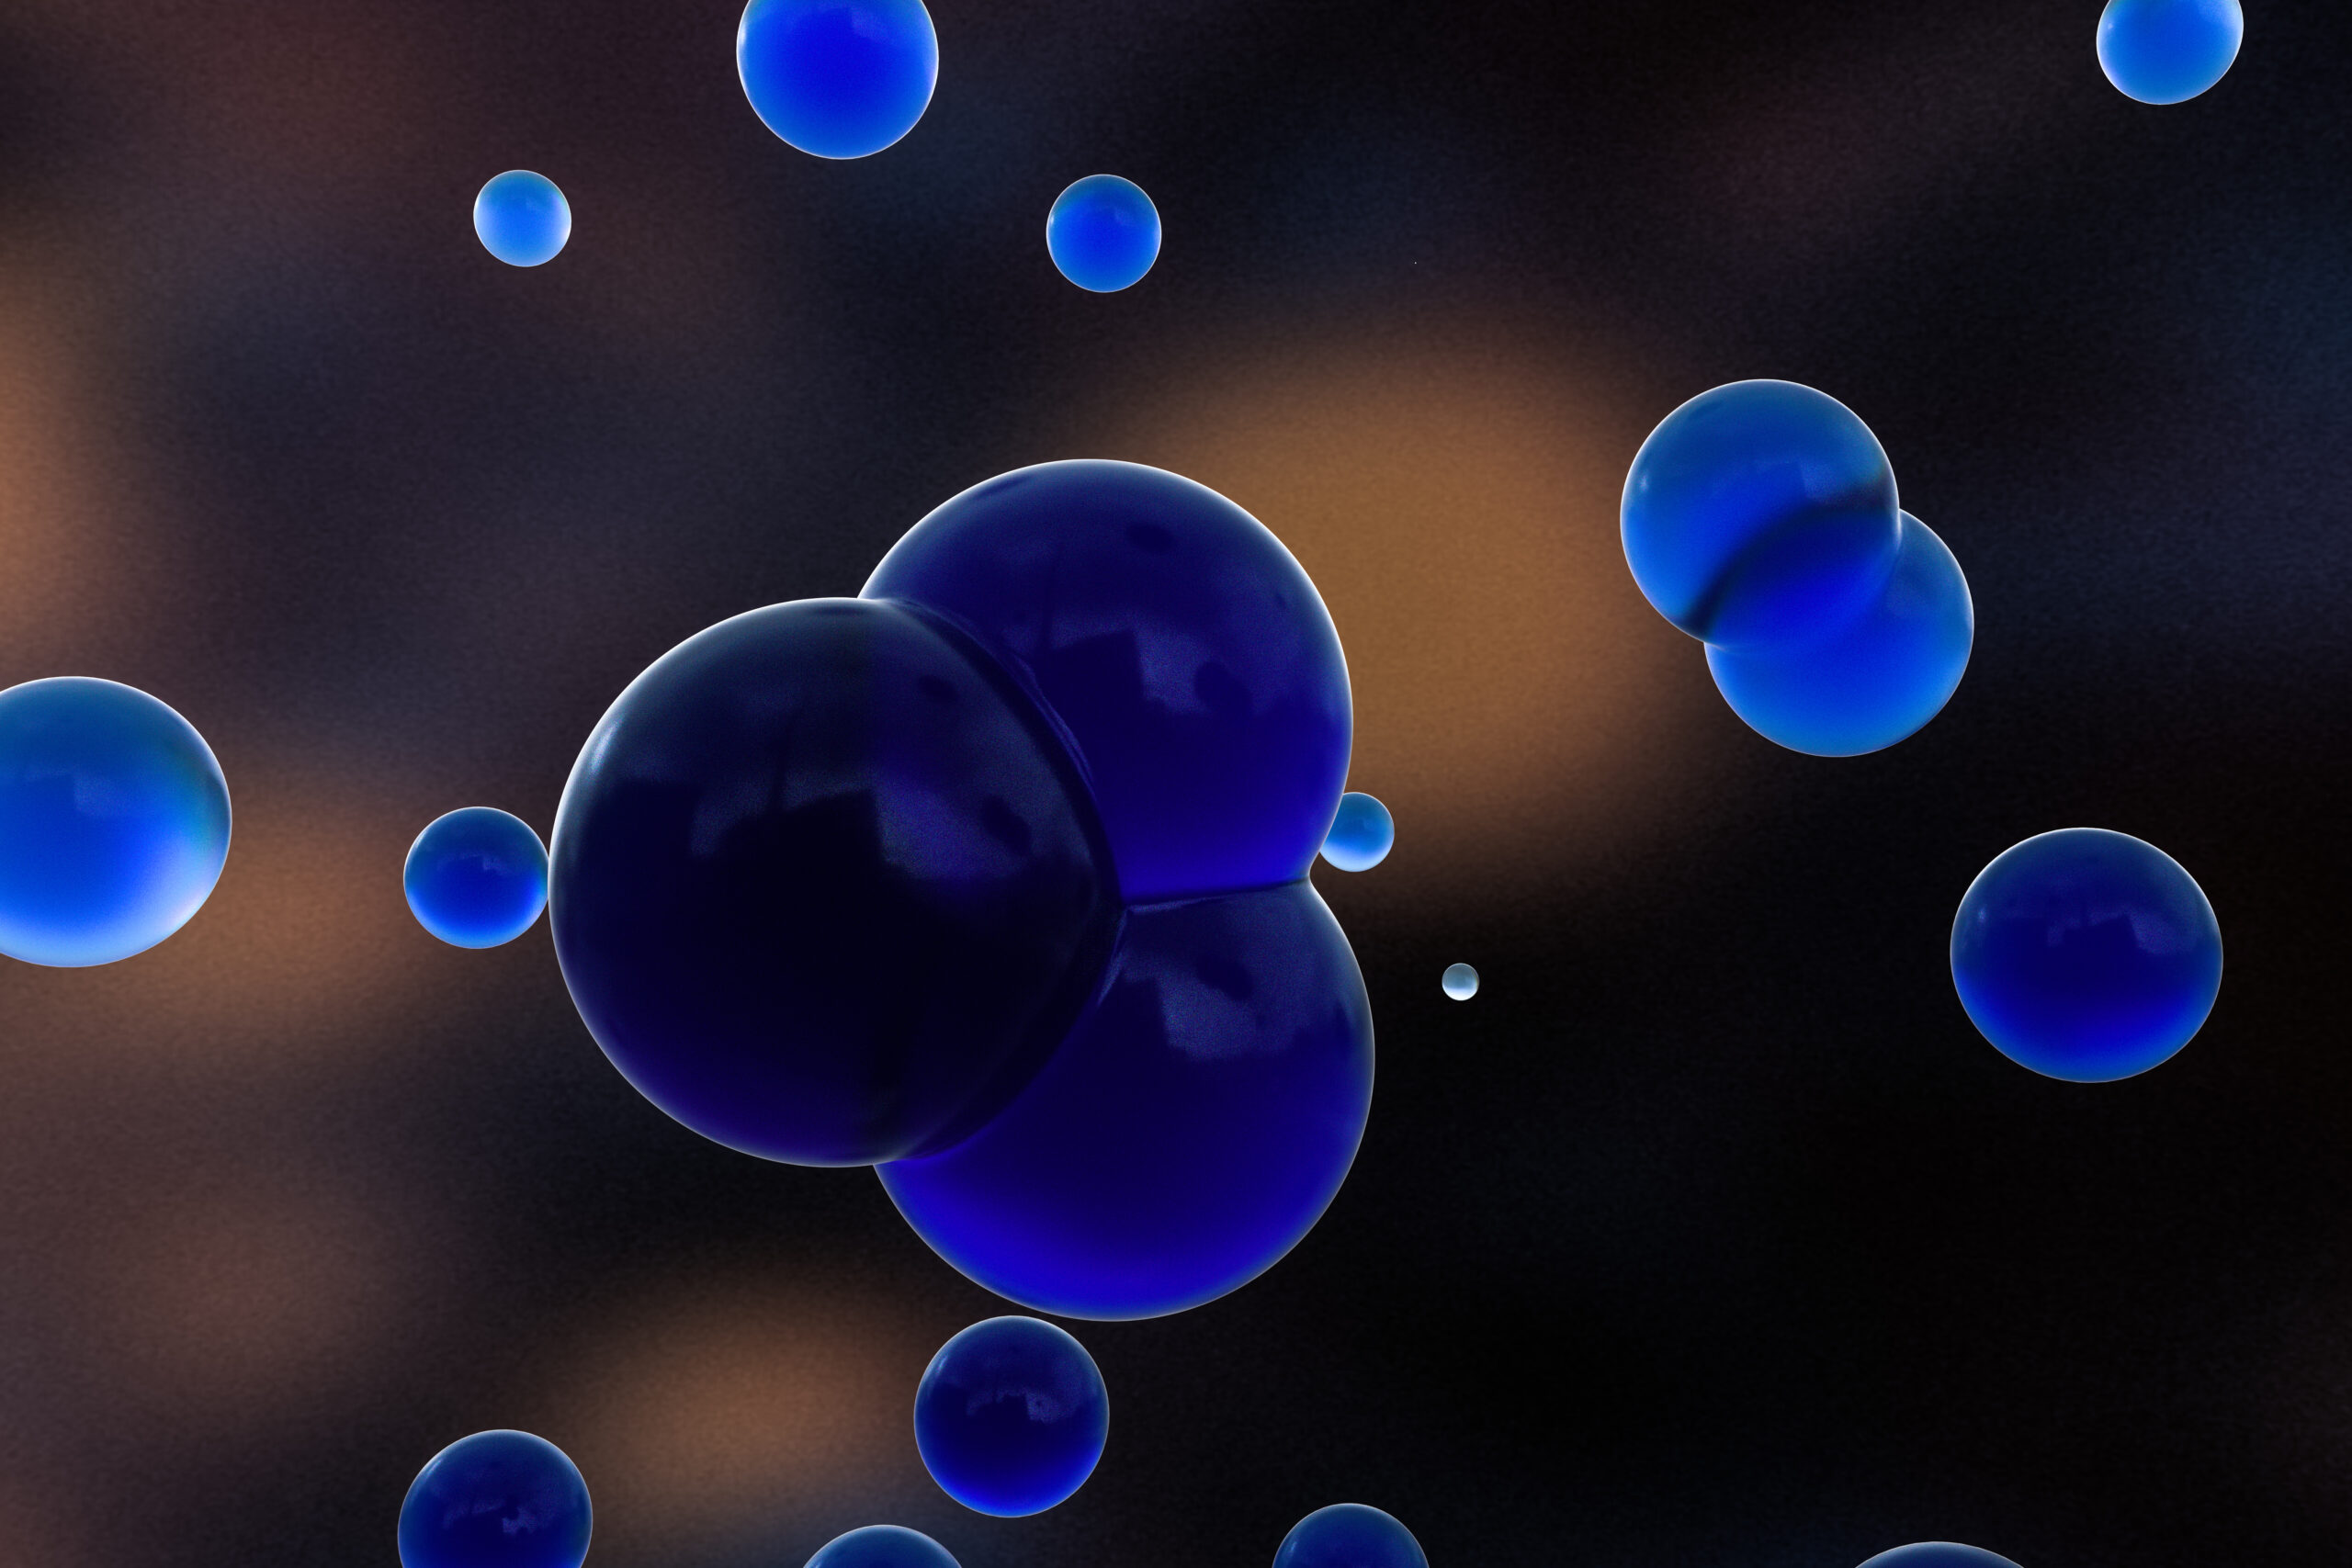 blue spheres molecular model random distributed 3d rendering 1 scaled 1